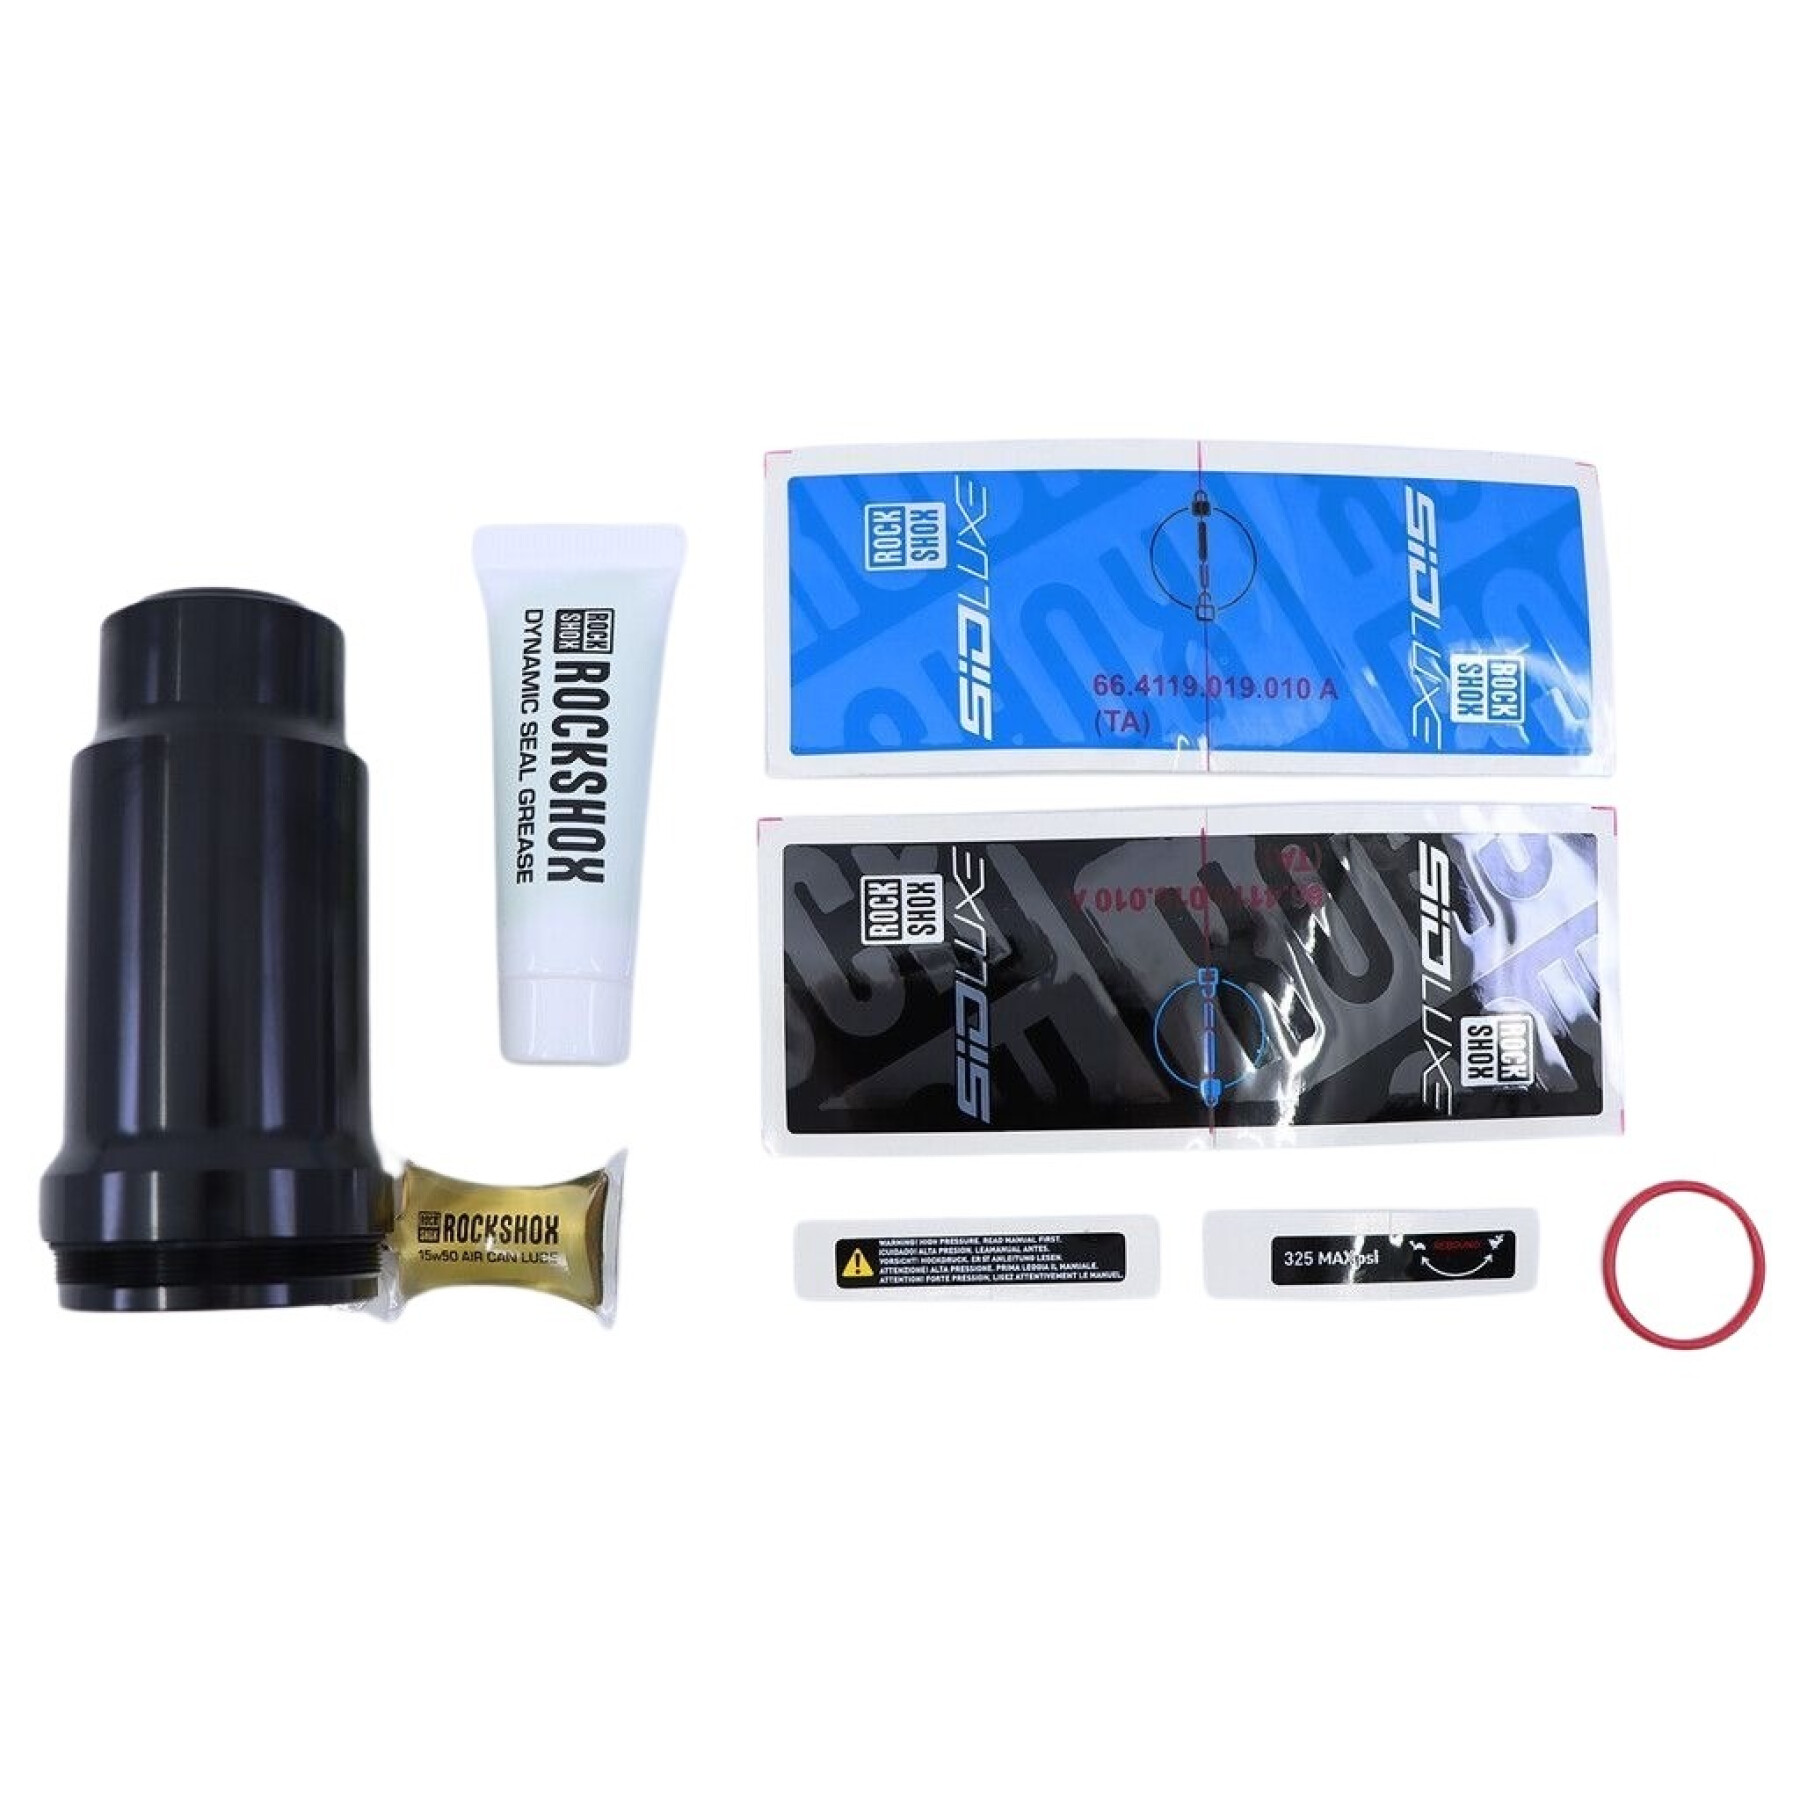 Amortiguador Rockshox Kit Air Can Dba 185/210x47.5-55mm Sidluxe A1 2021